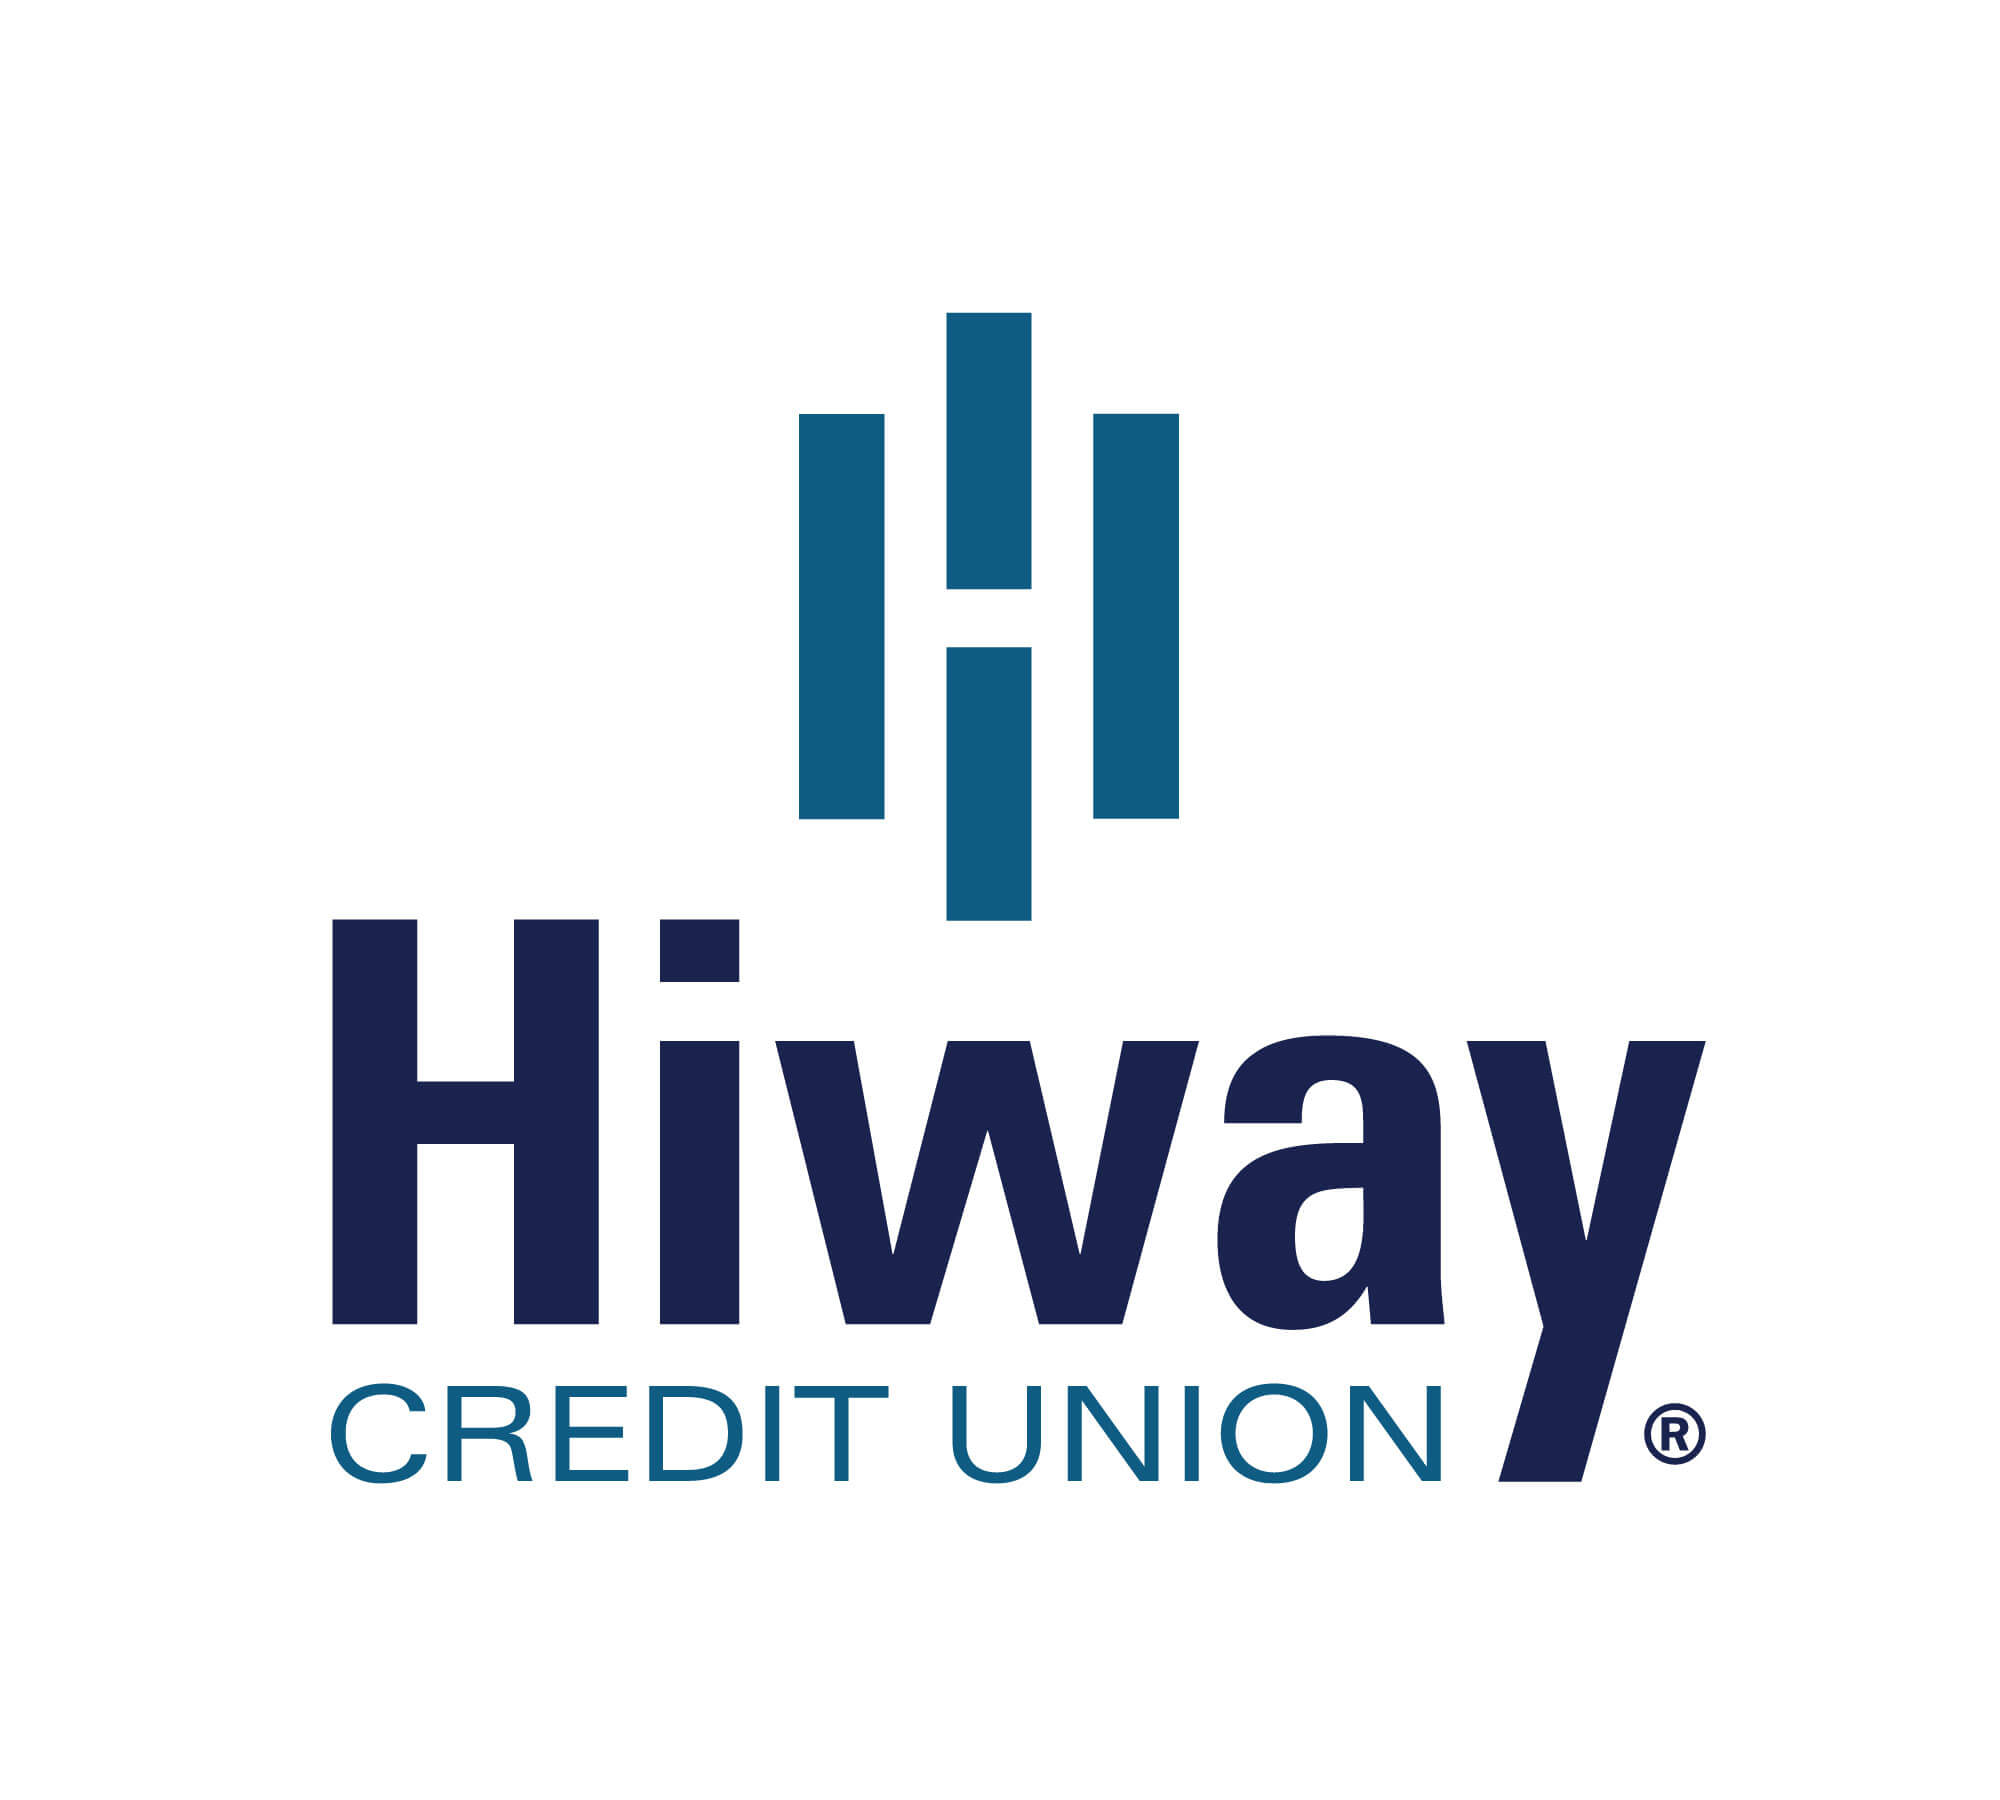 Hiway Credit Union